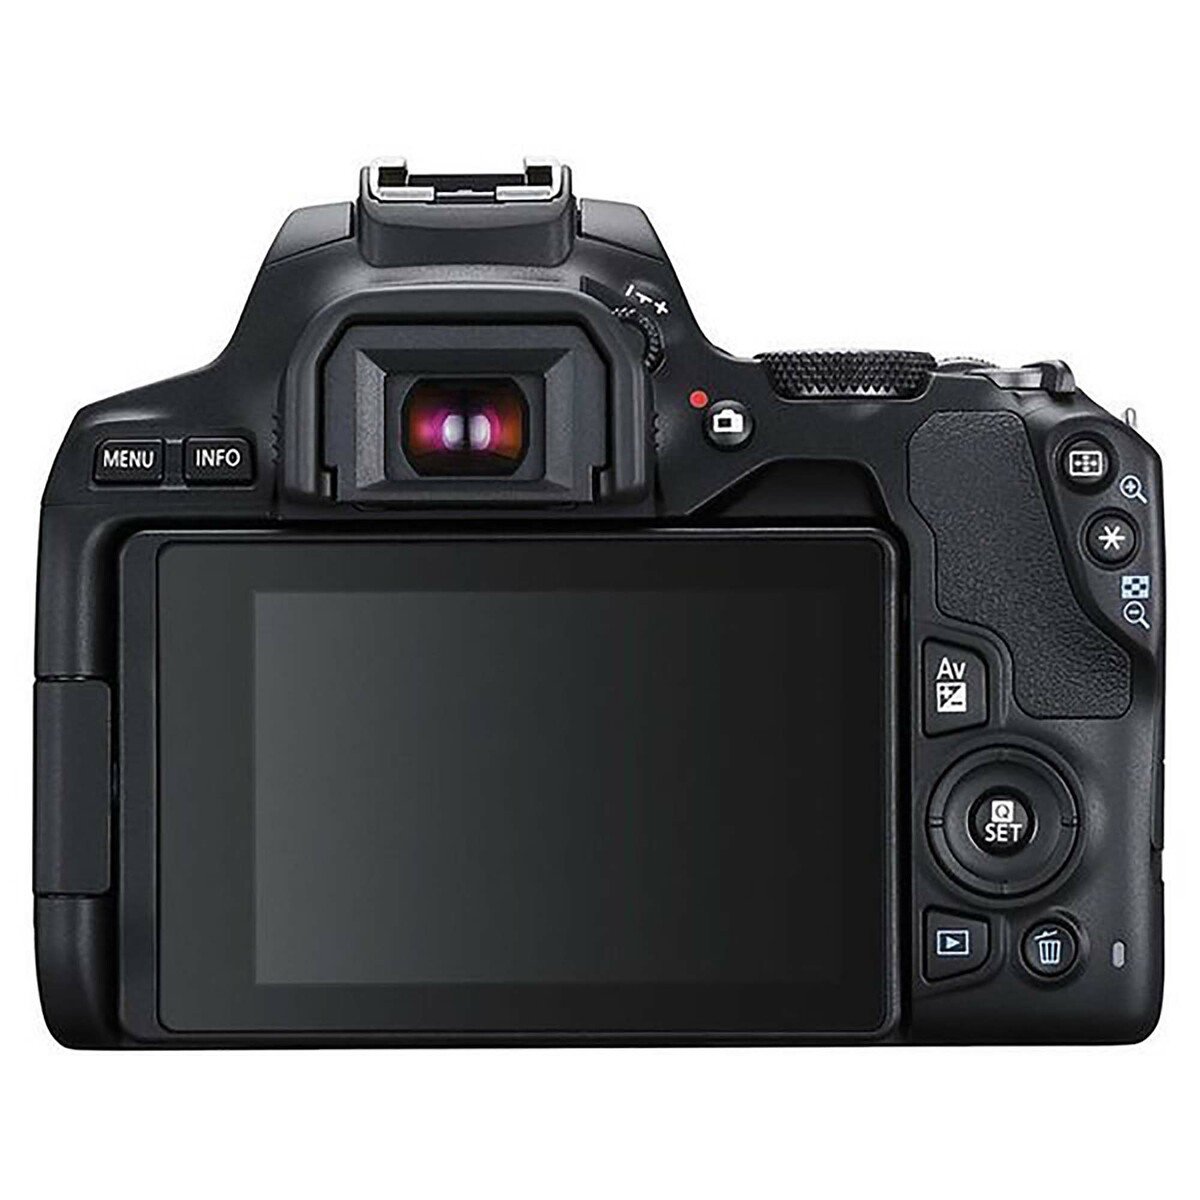 Canon DSLR Camera EOS 250D EF-S 18-55mm IS Lens Silver + 75-300mm DC Lens